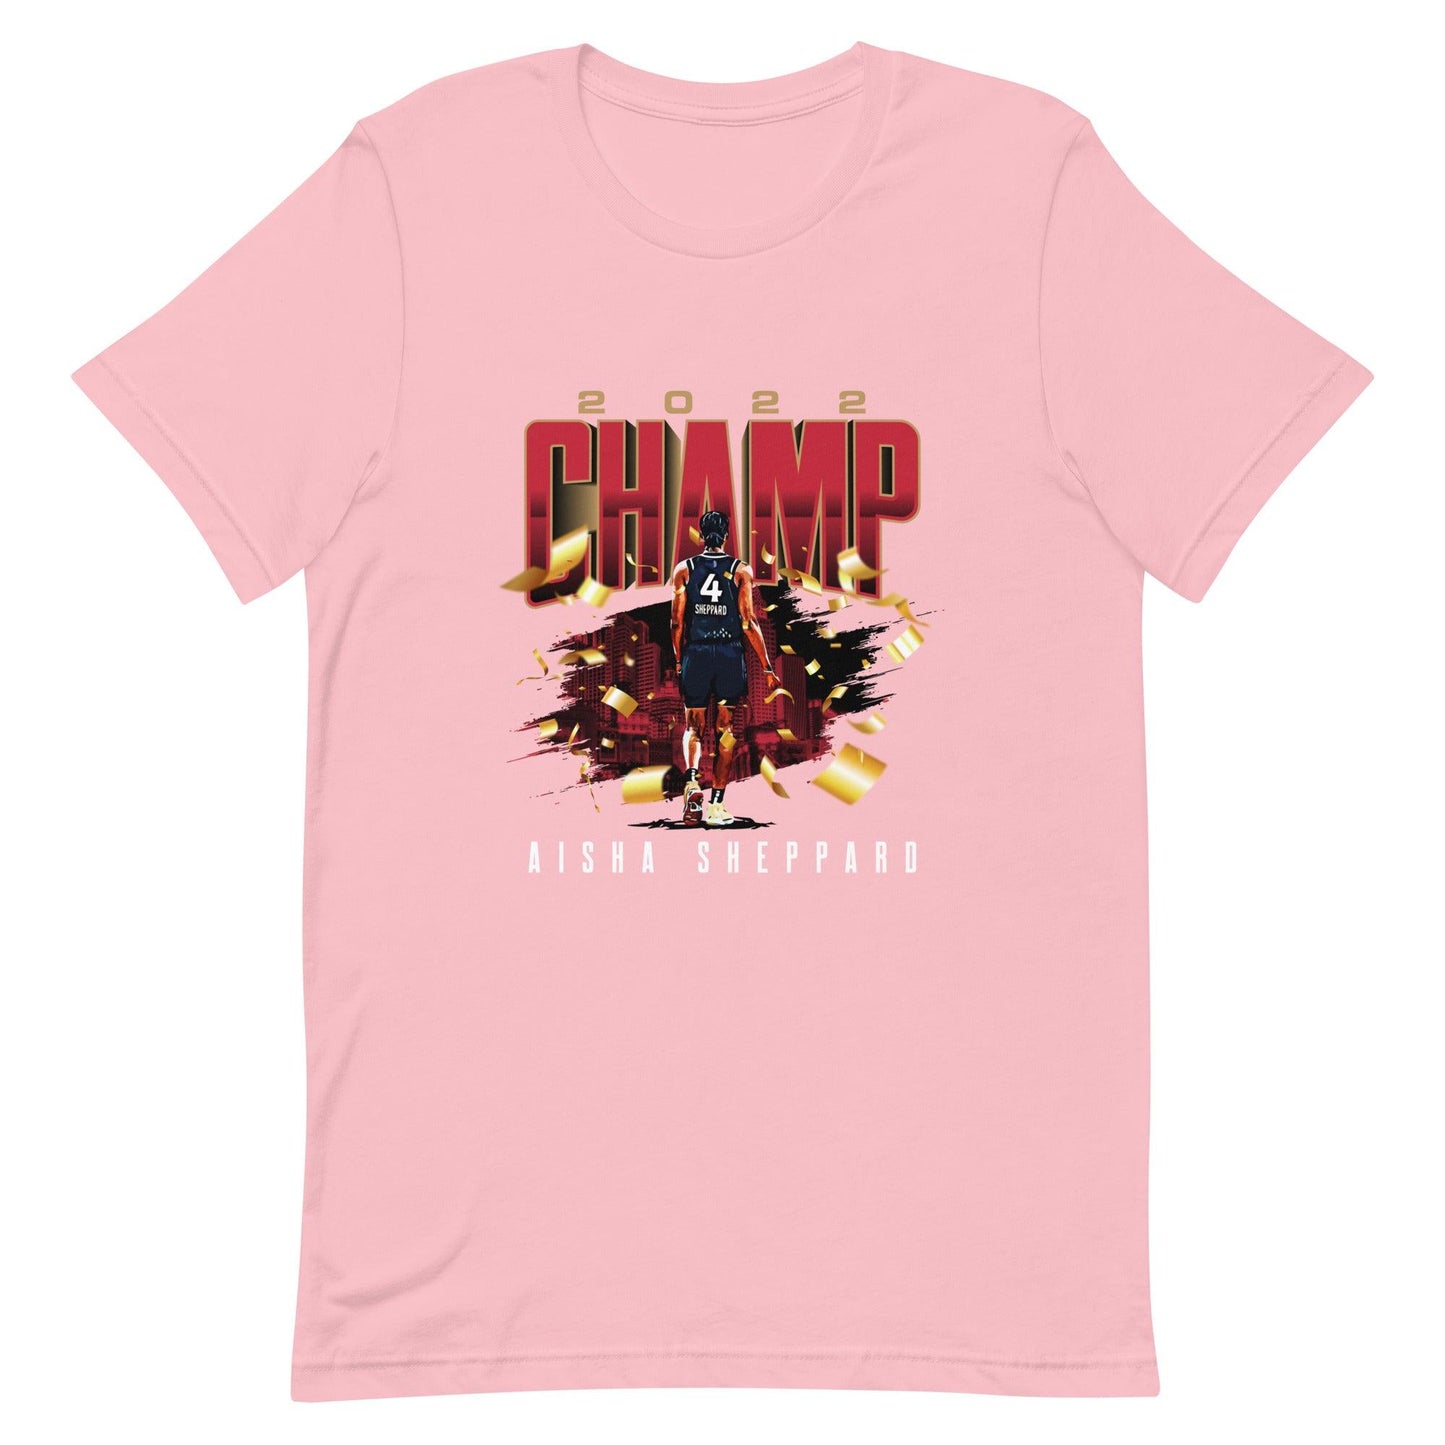 Aisha Sheppard "2022 Champ" t-shirt - Fan Arch